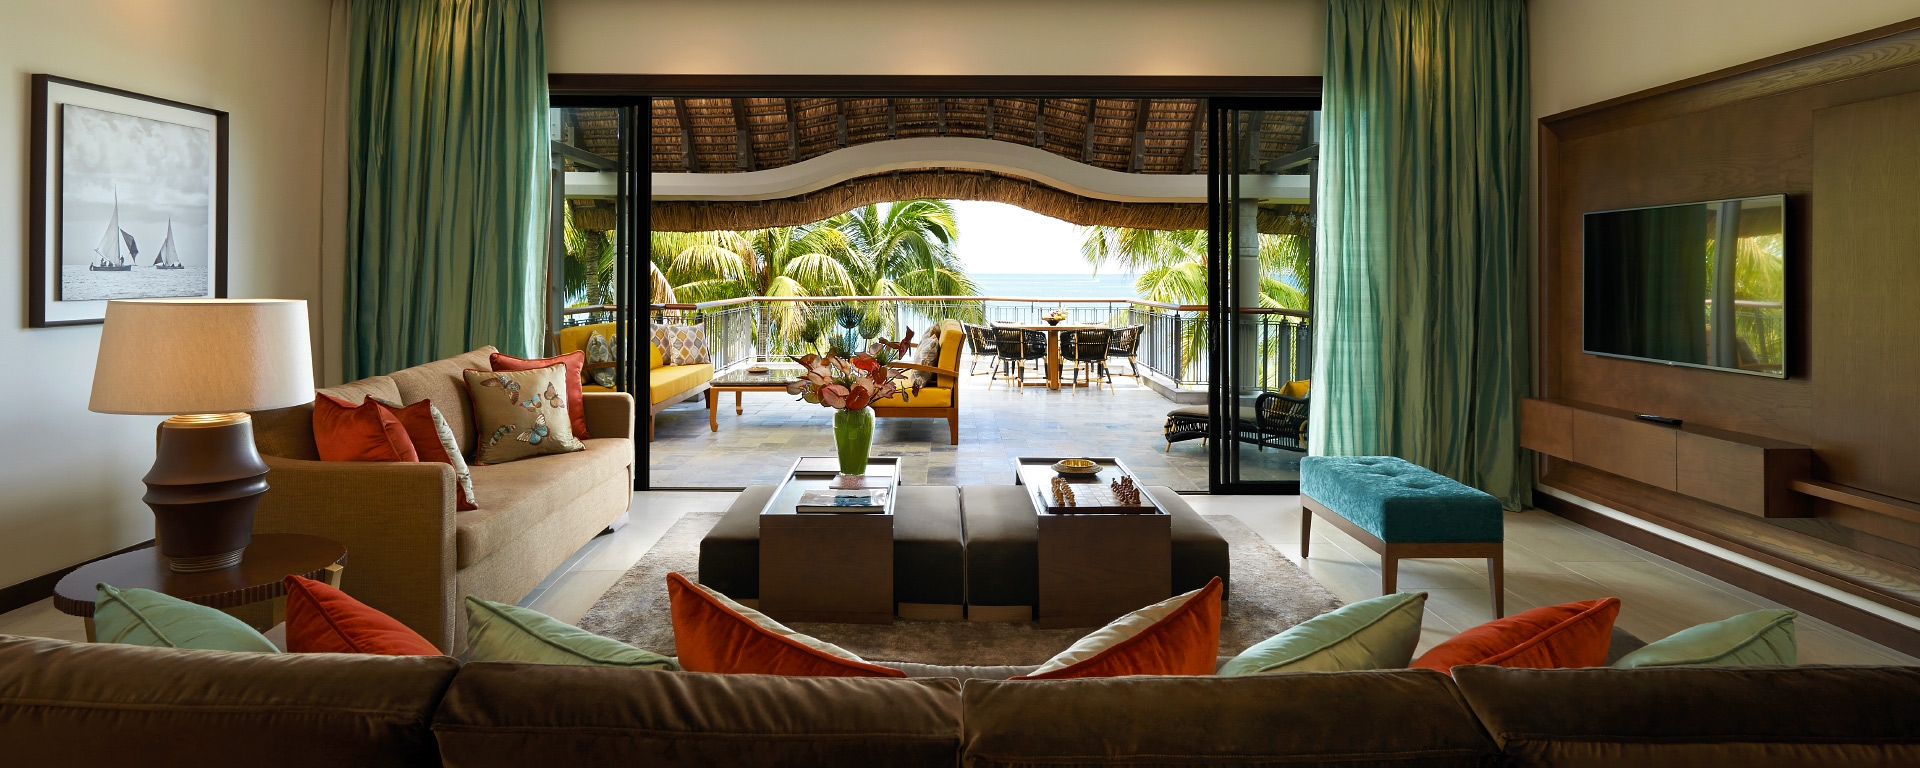 Rooms - Royal Palm Beachcomber Luxury